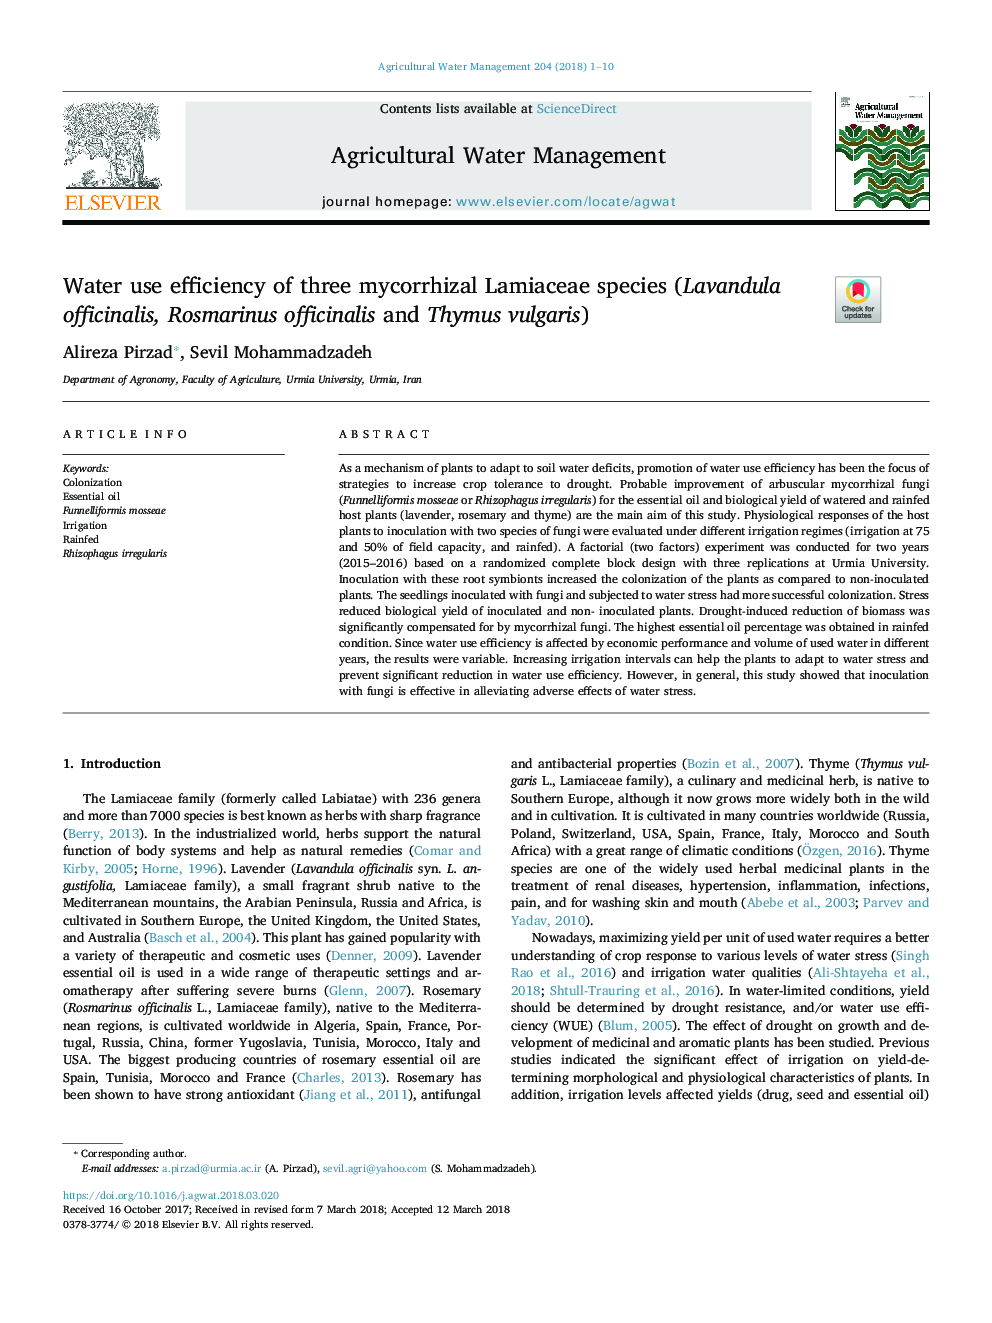 Water use efficiency of three mycorrhizal Lamiaceae species (Lavandula officinalis, Rosmarinus officinalis and Thymus vulgaris)